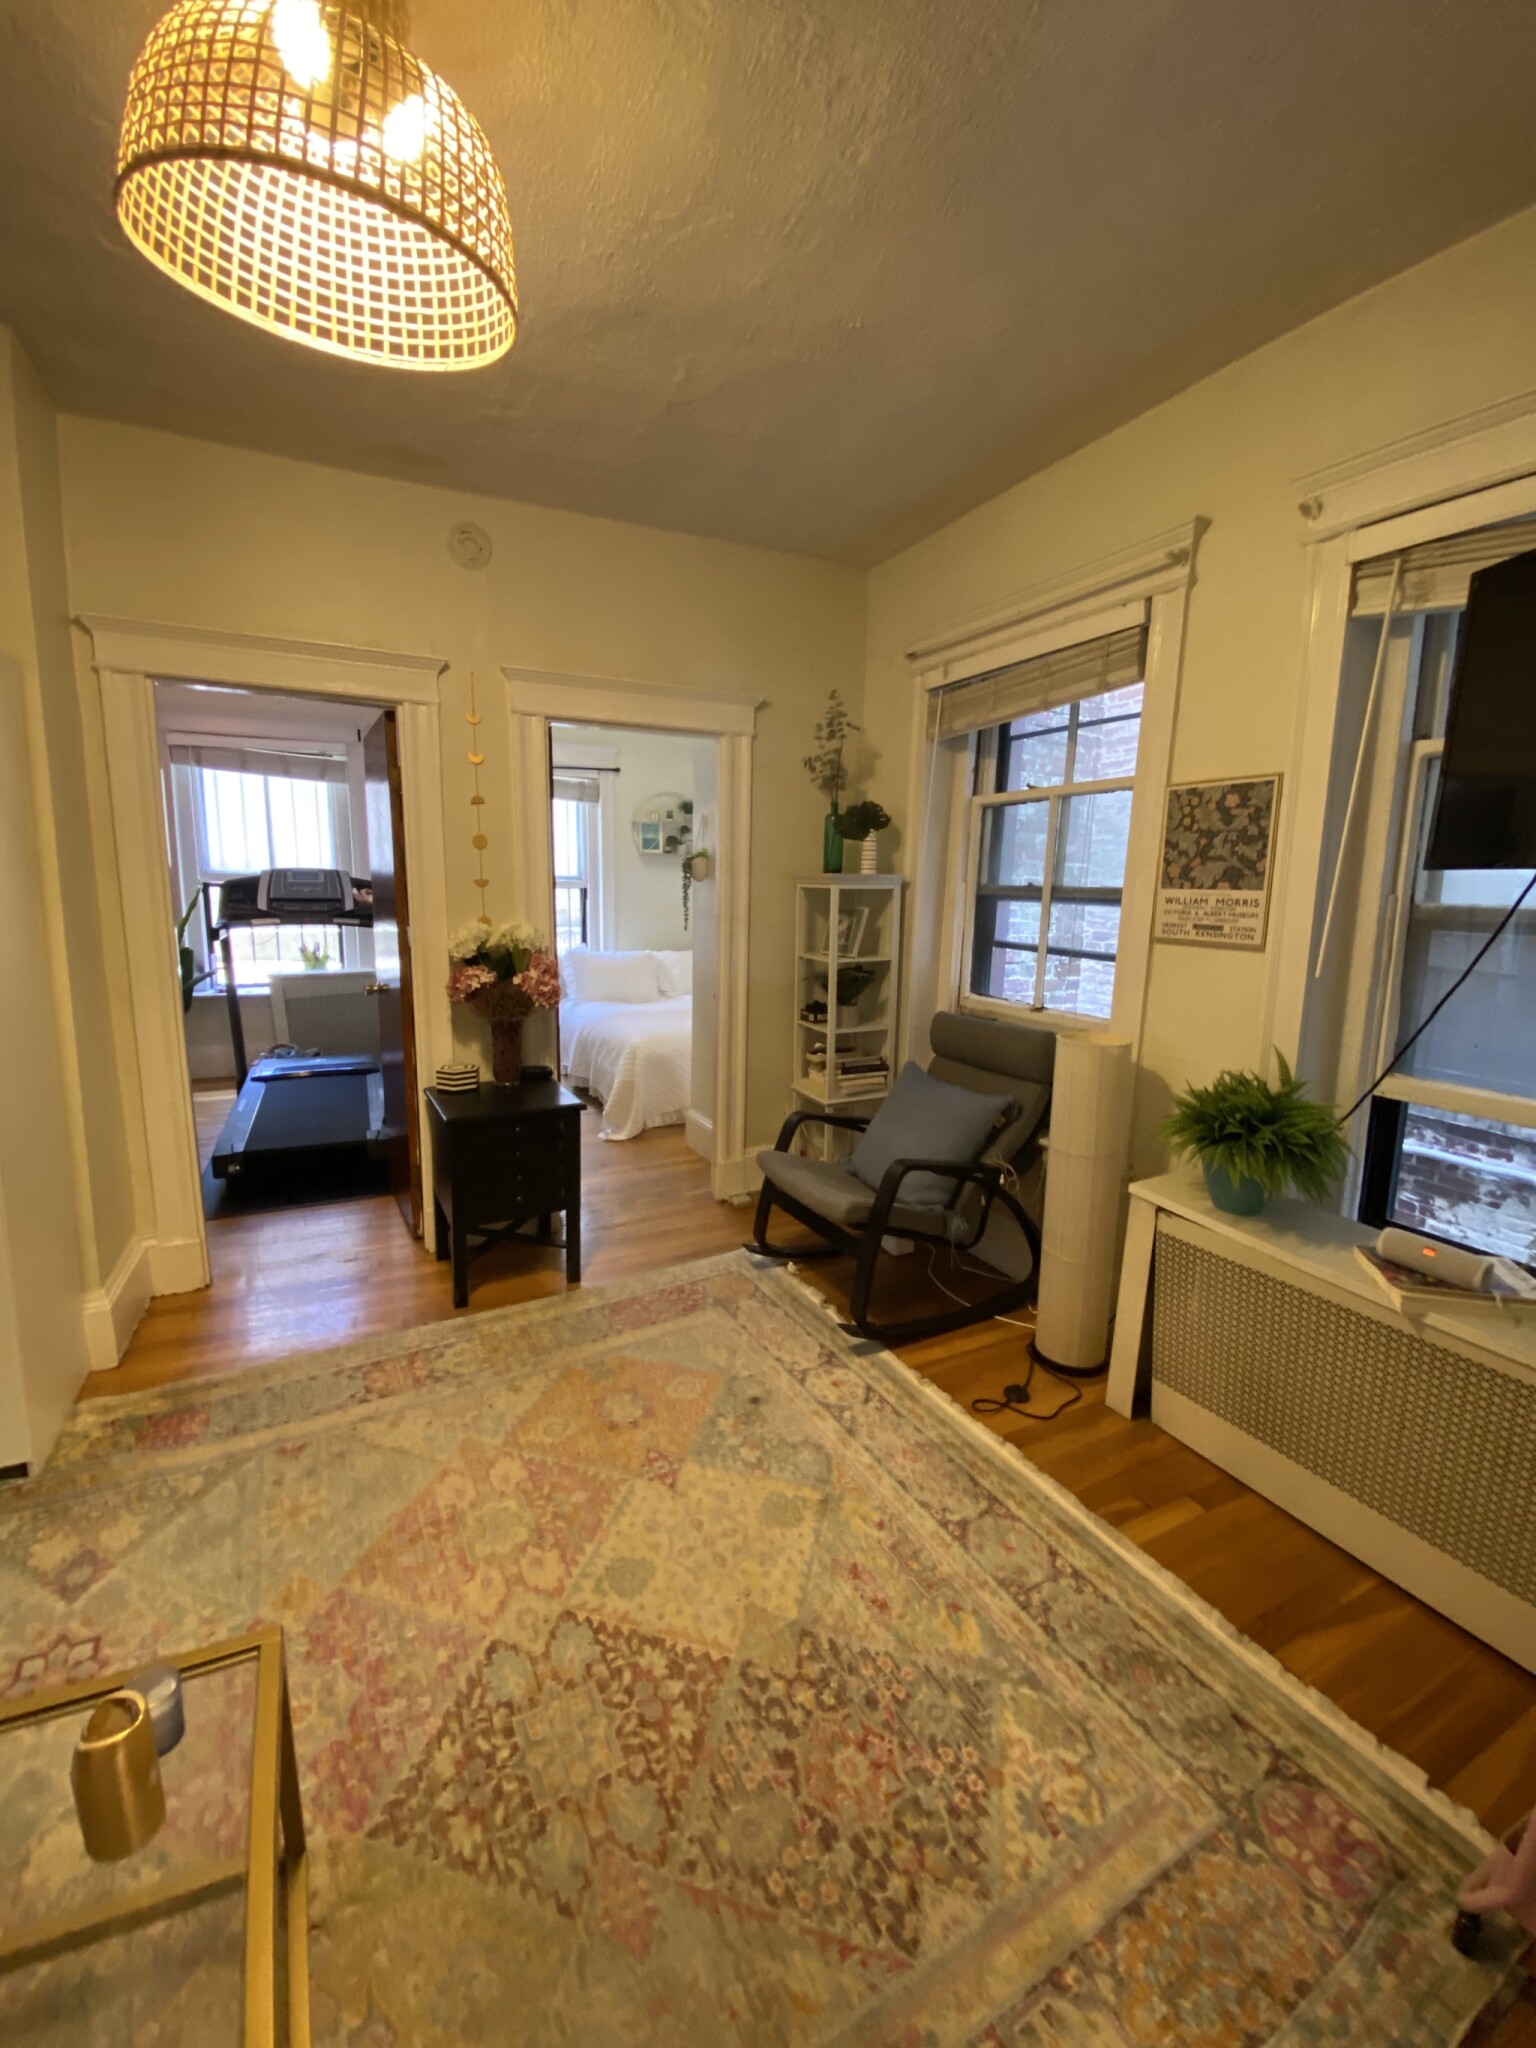 Photos of apartment on Portland St.,Boston MA 02114